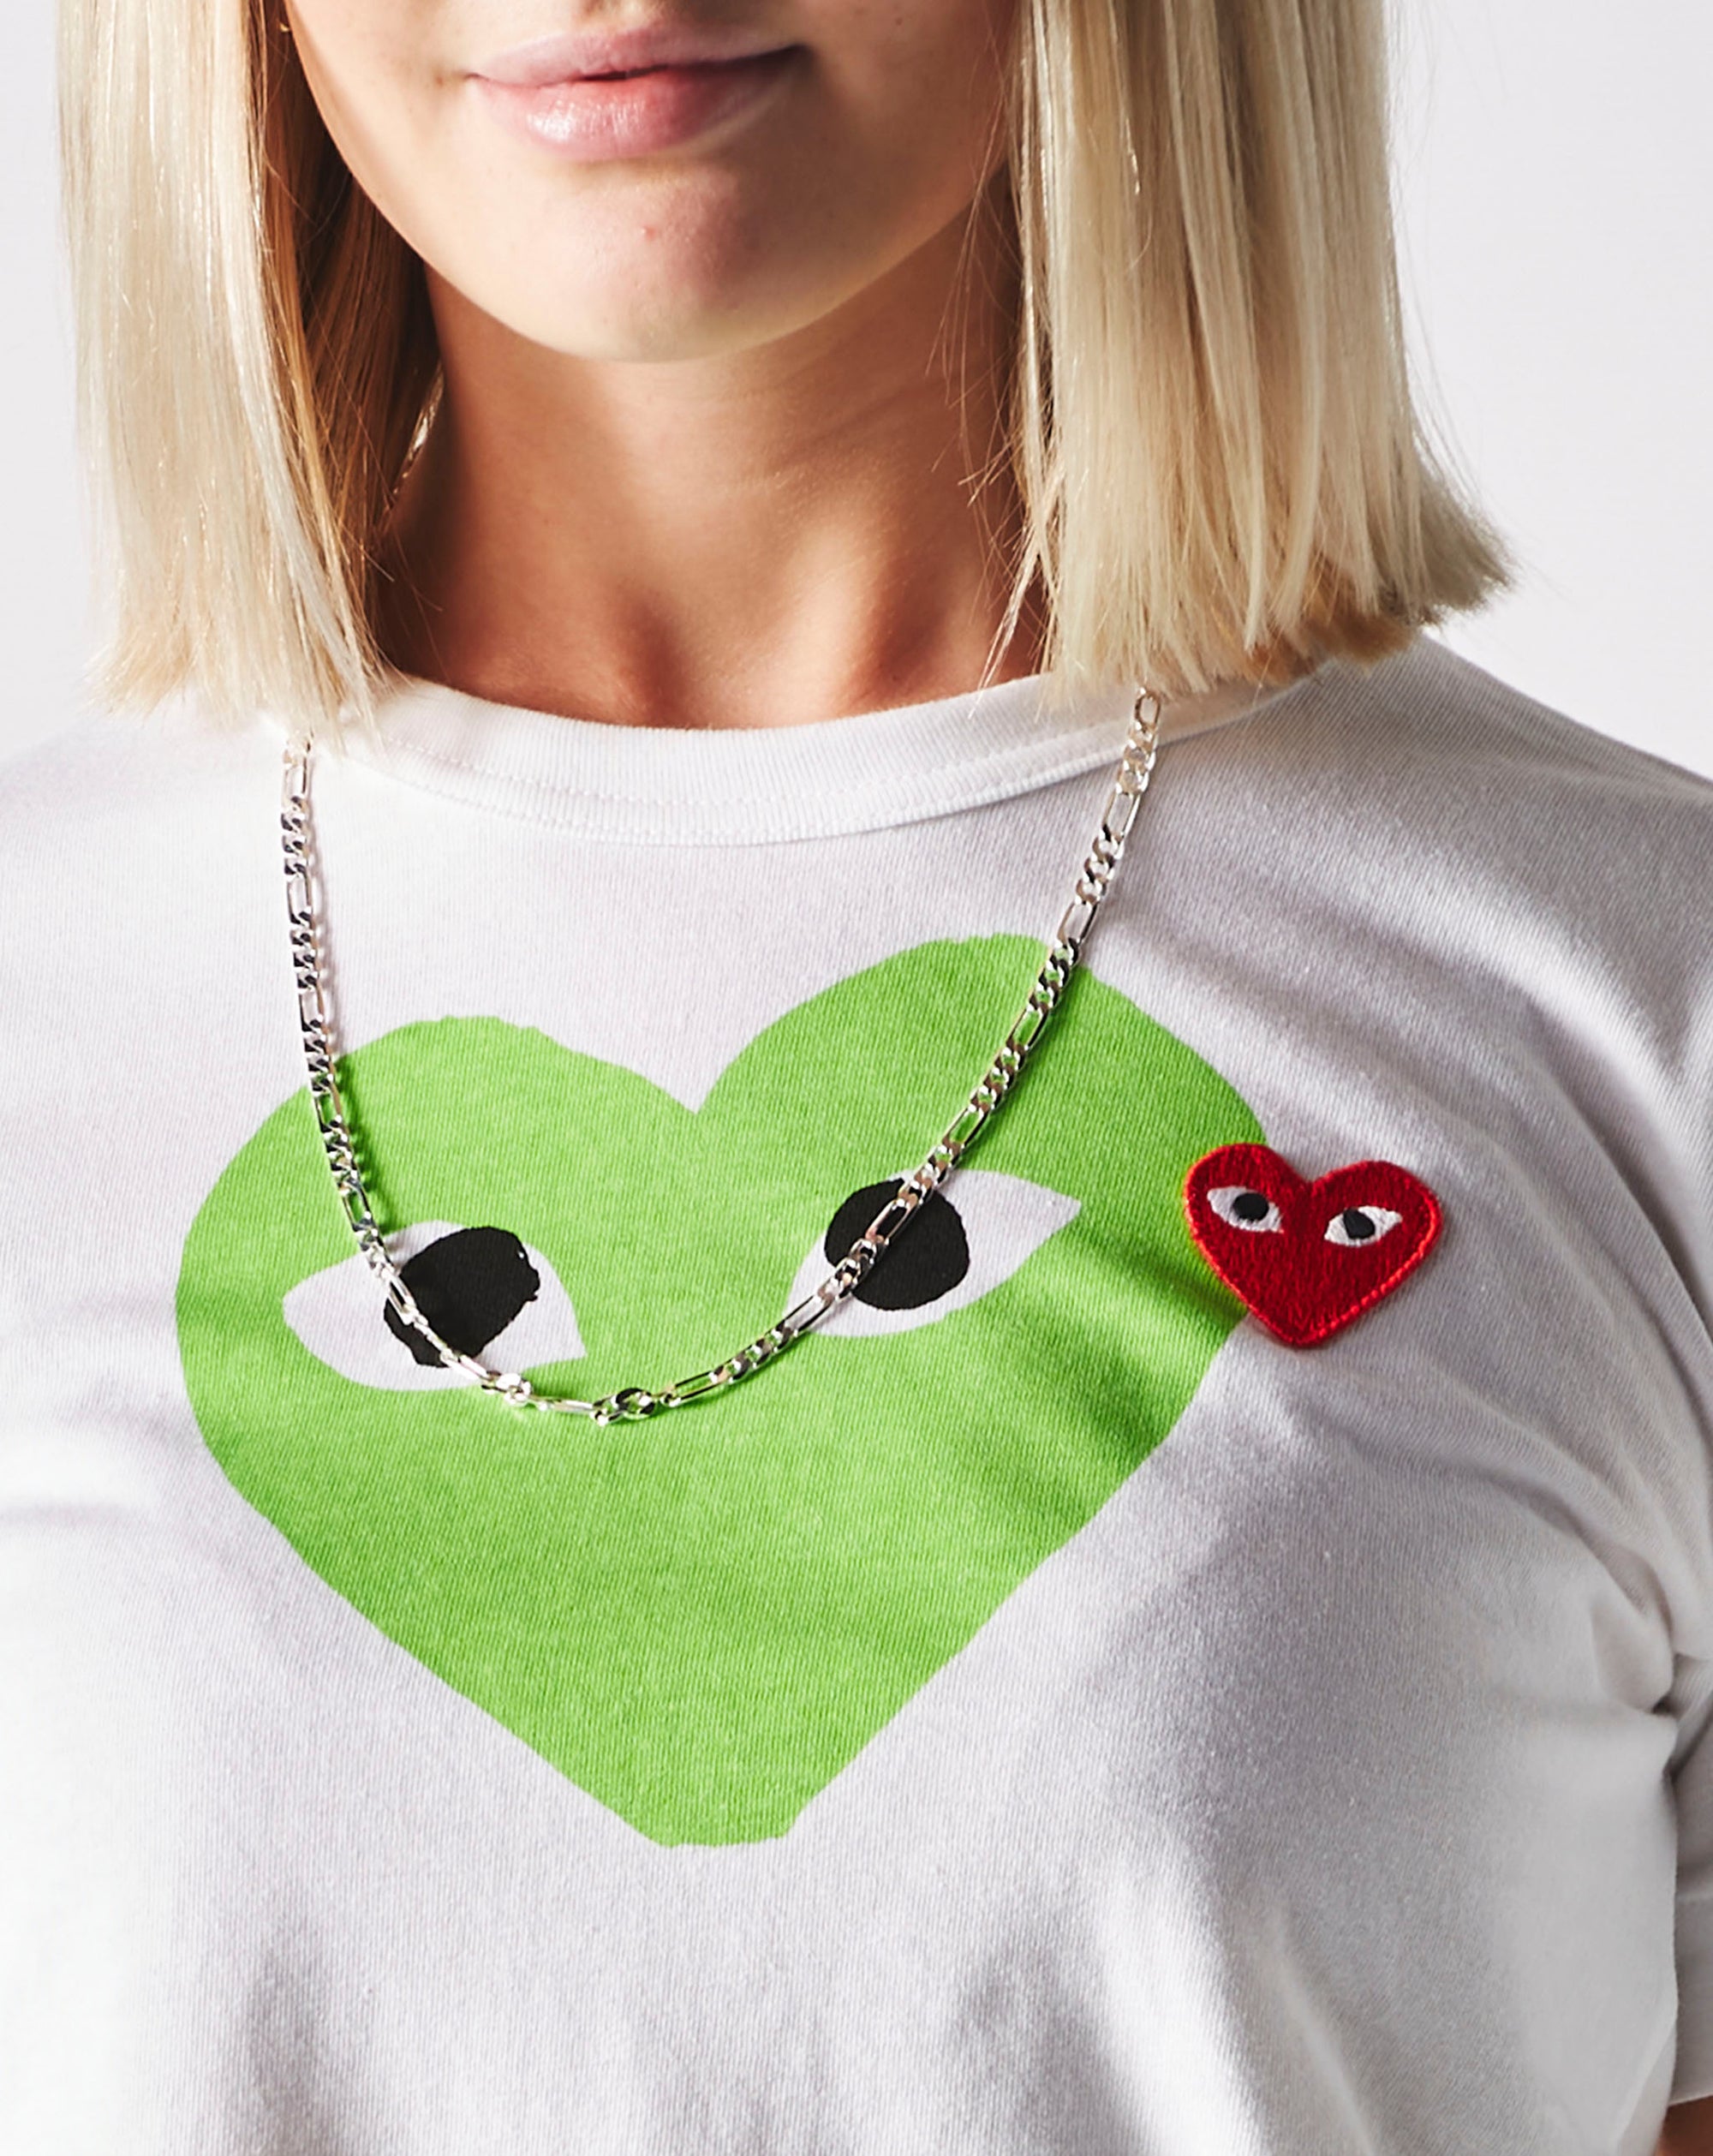 Comme des Garcons PLAY Women's Double Heart Logo T-Shirt - Rule of Next Apparel